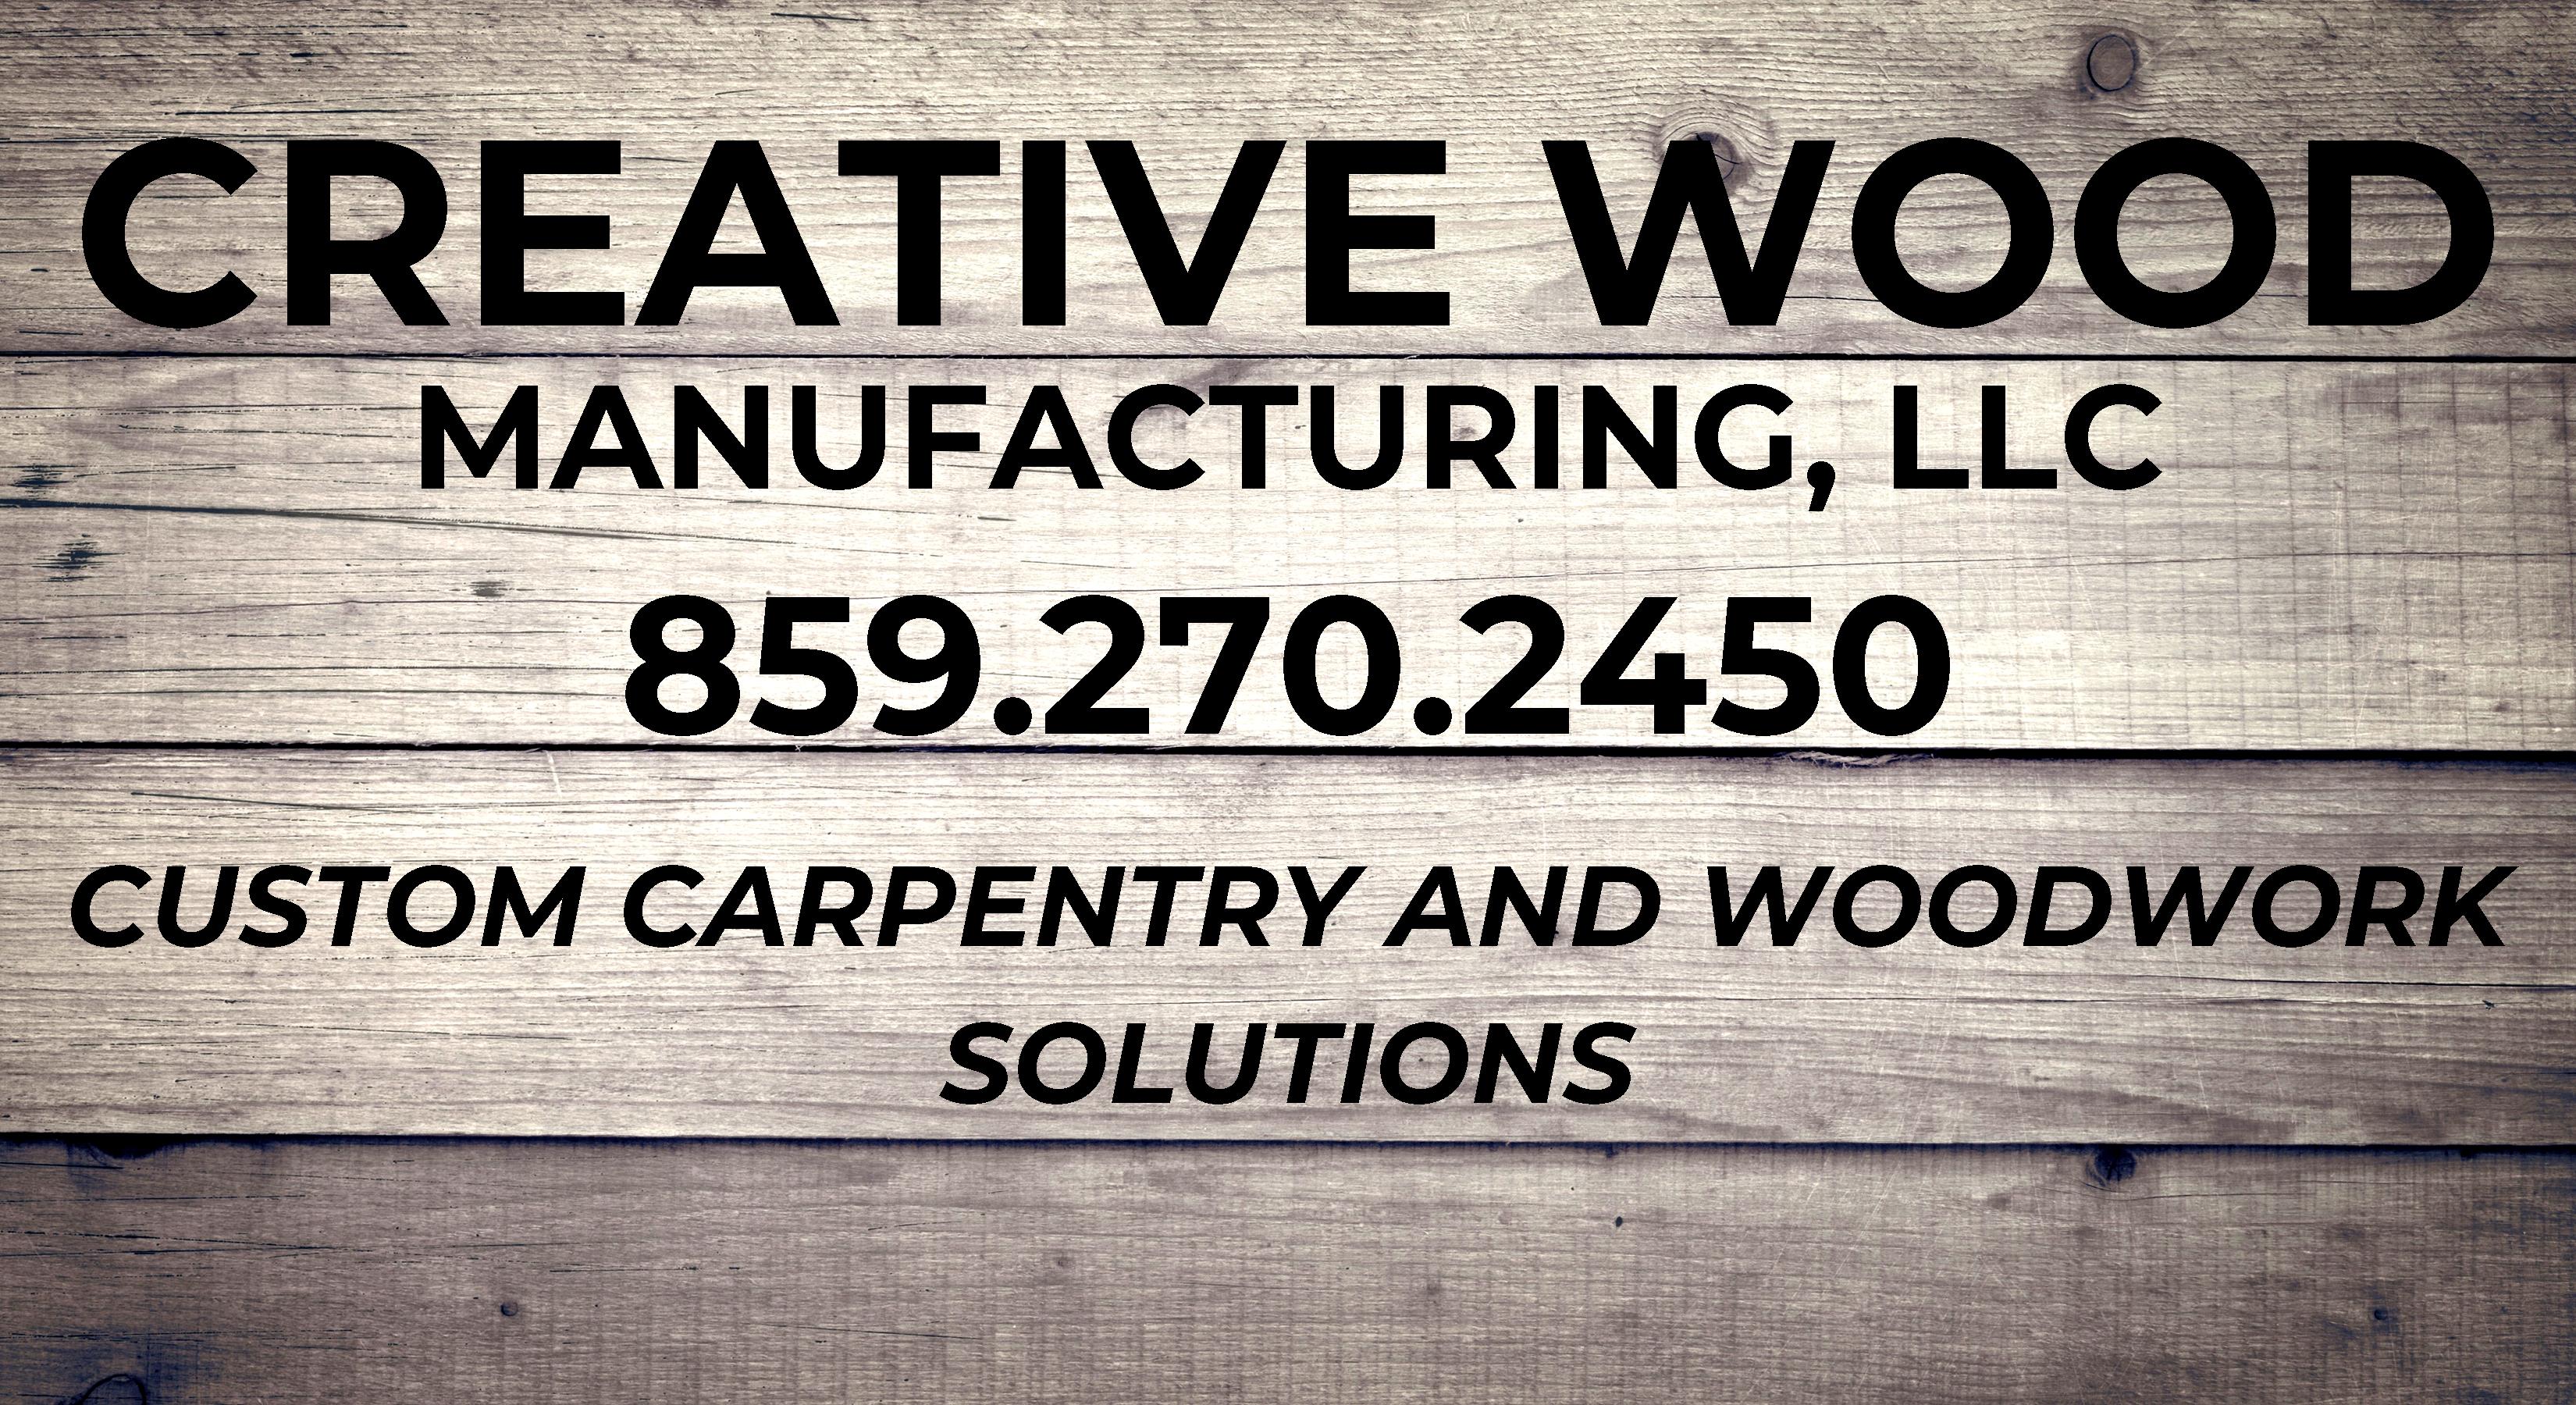 Creative Wood Manufacturing, LLC Logo